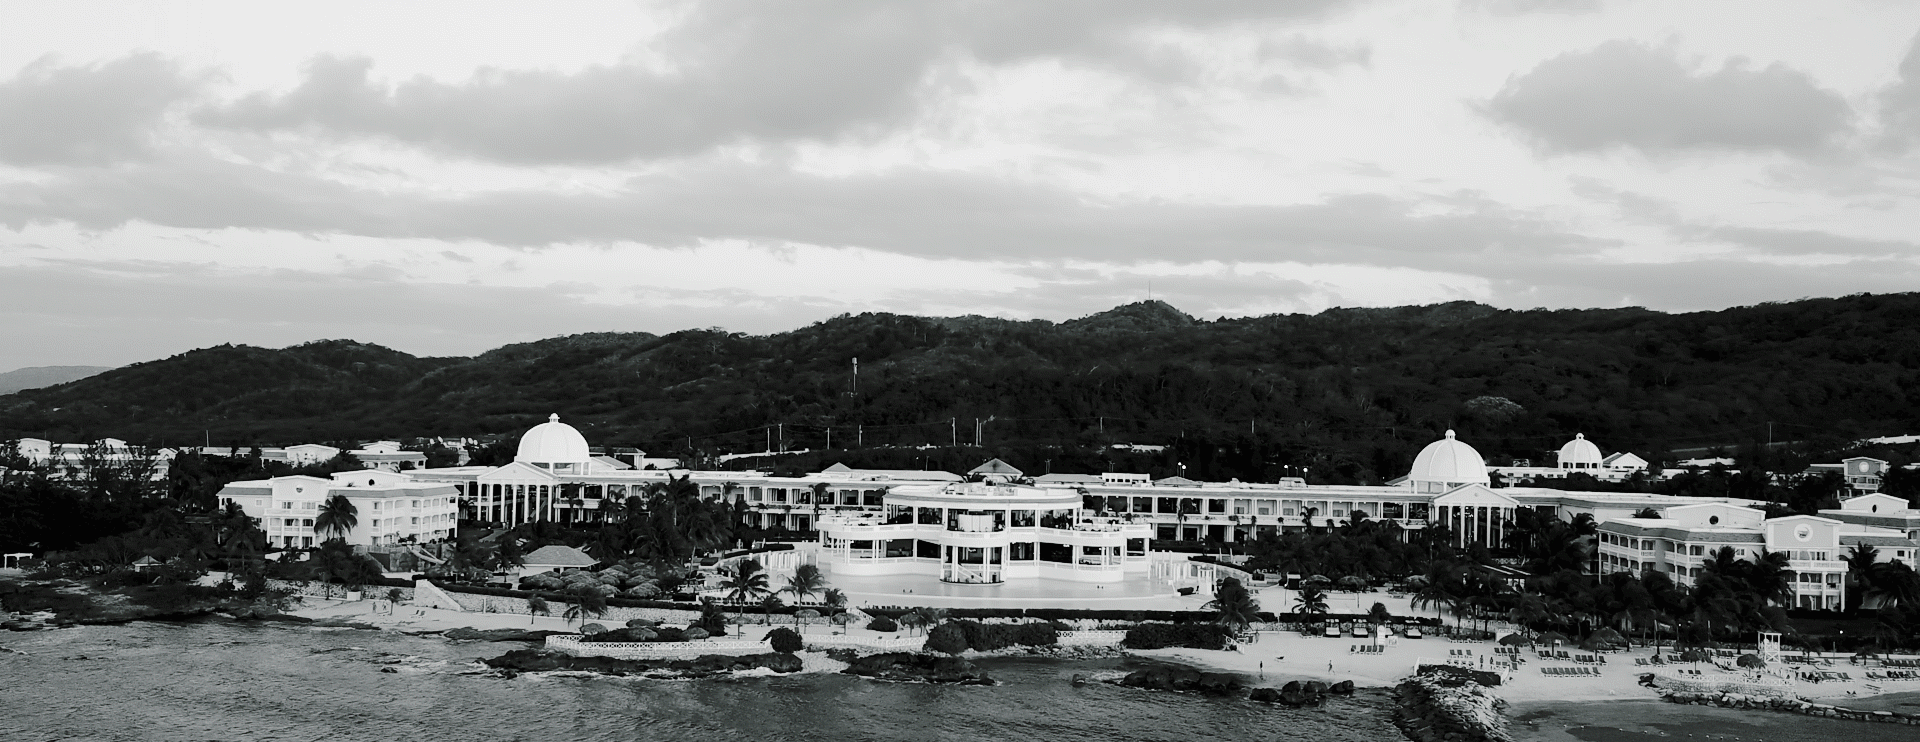 Grand Palladium Hotel and Spa Resort in Montego Bay, Jamaica